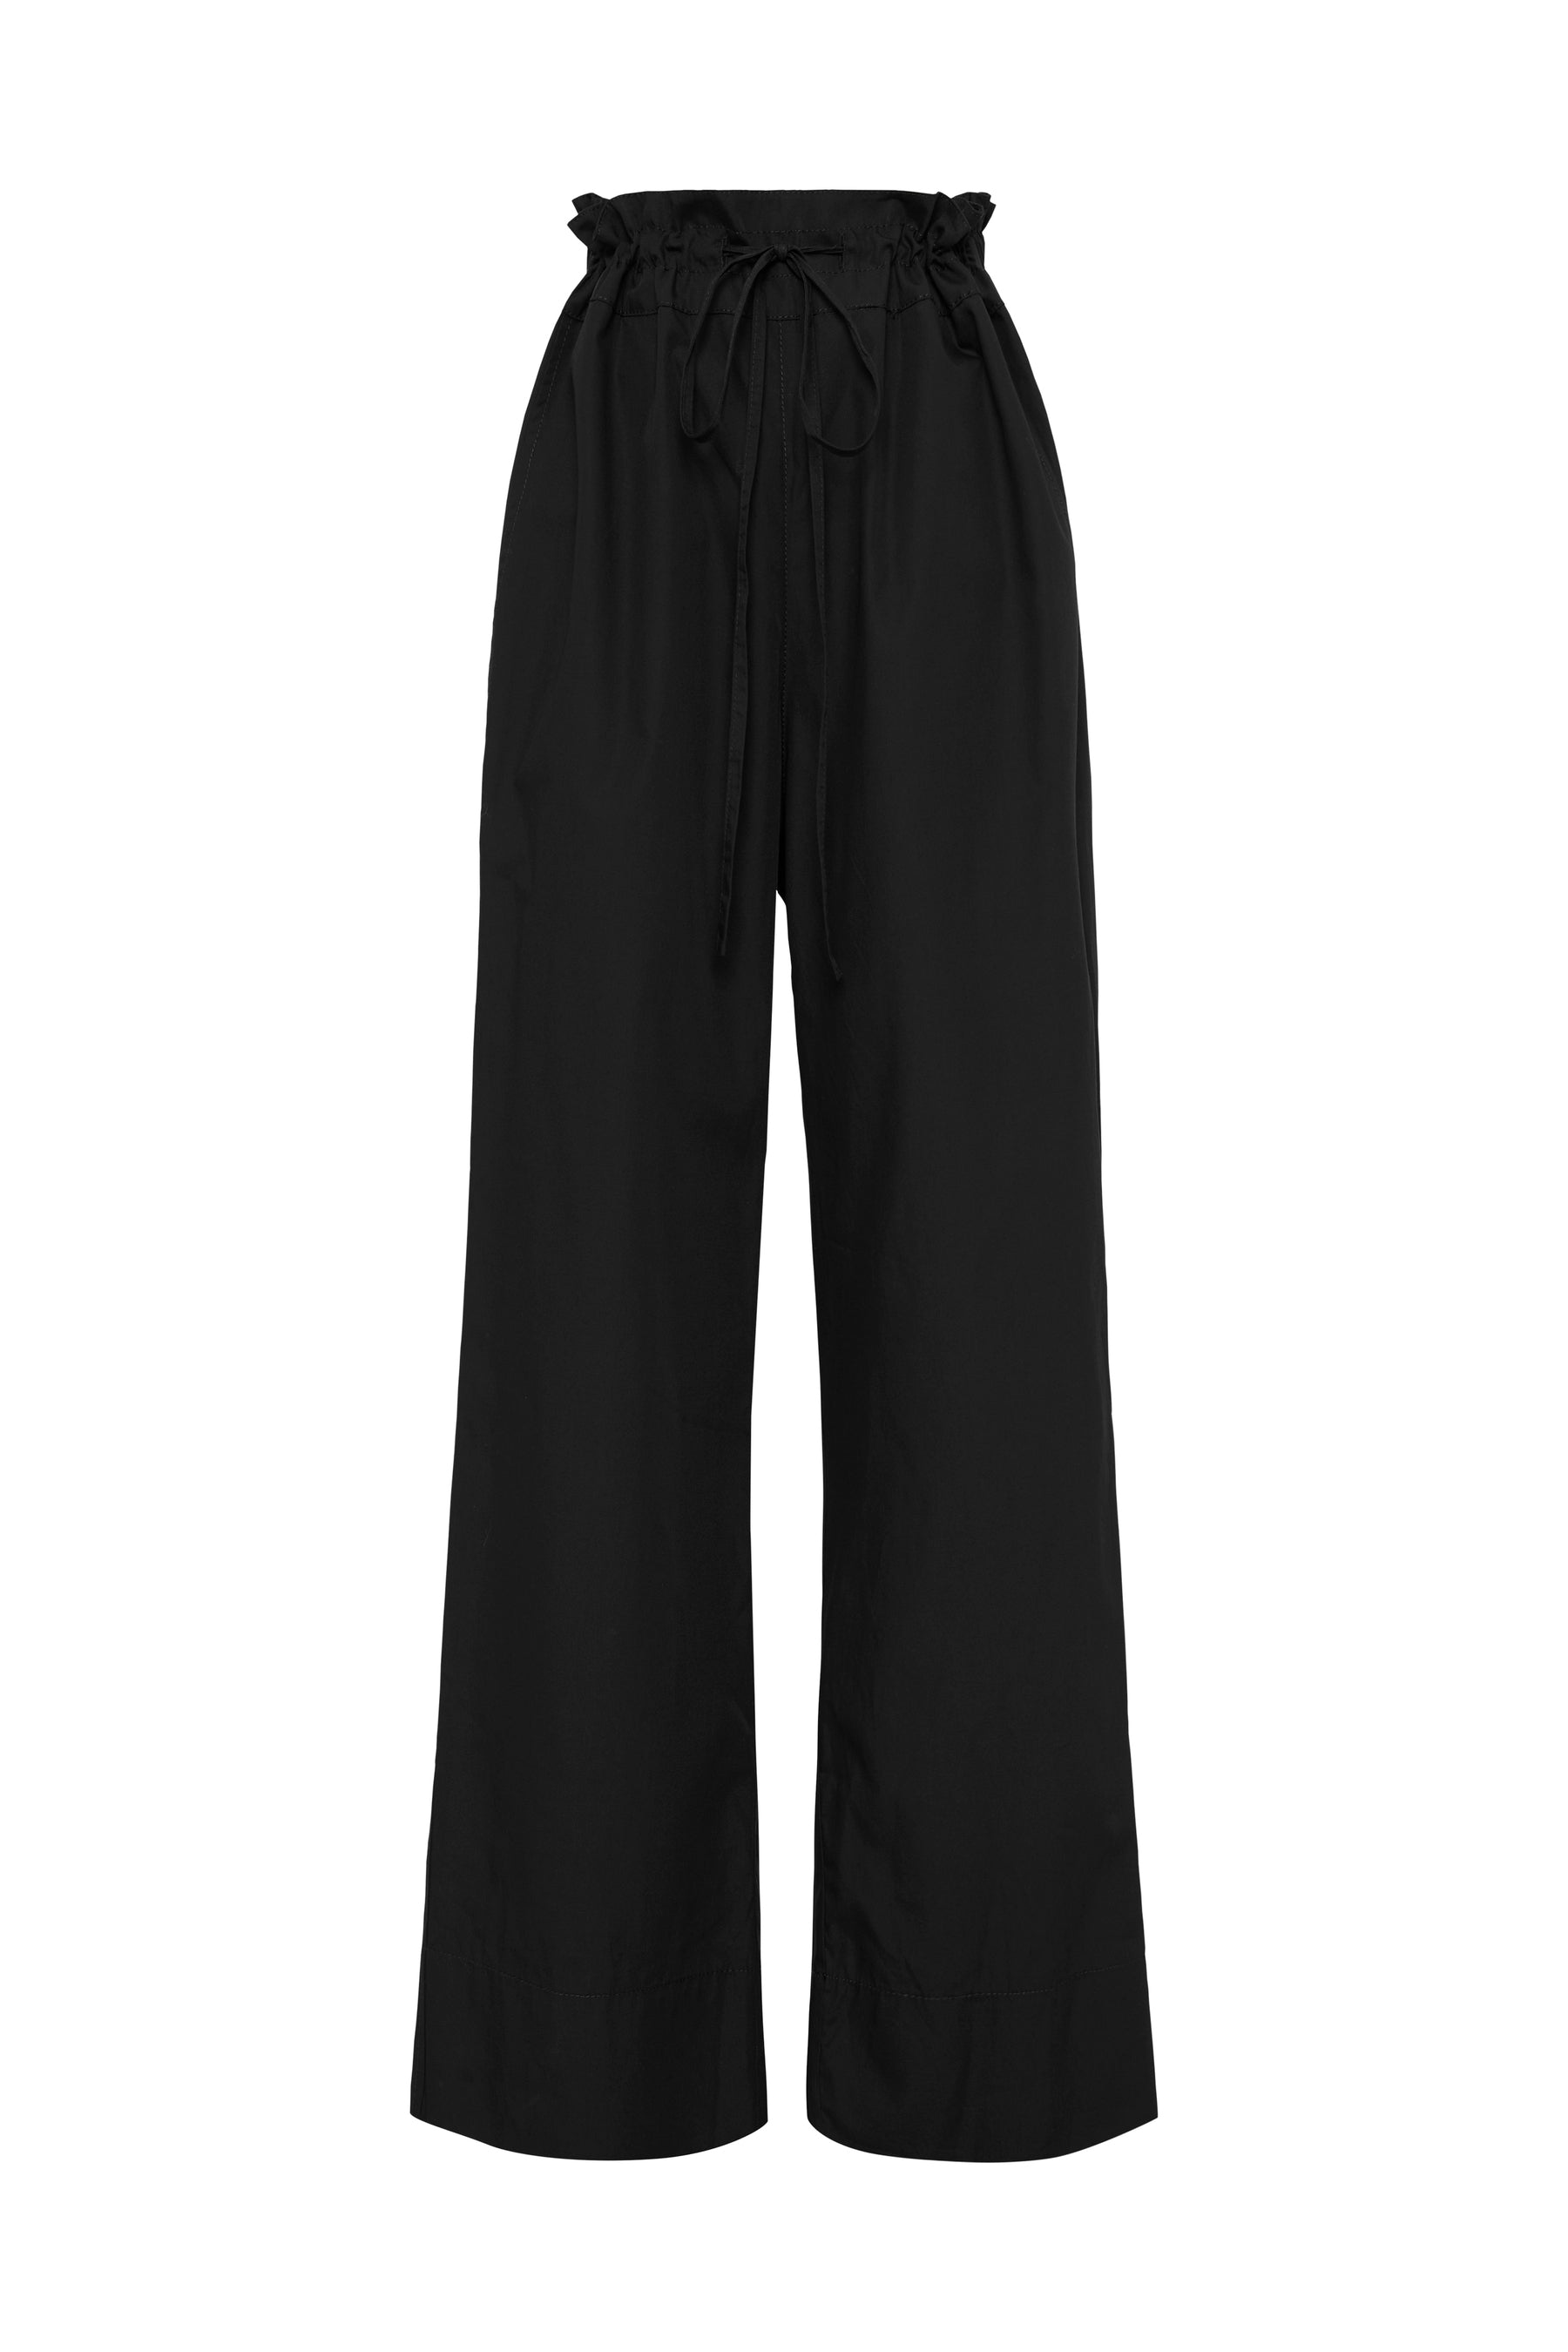 Monki Clara Organic Cotton Blend Ribbed Jersey Pants in Black